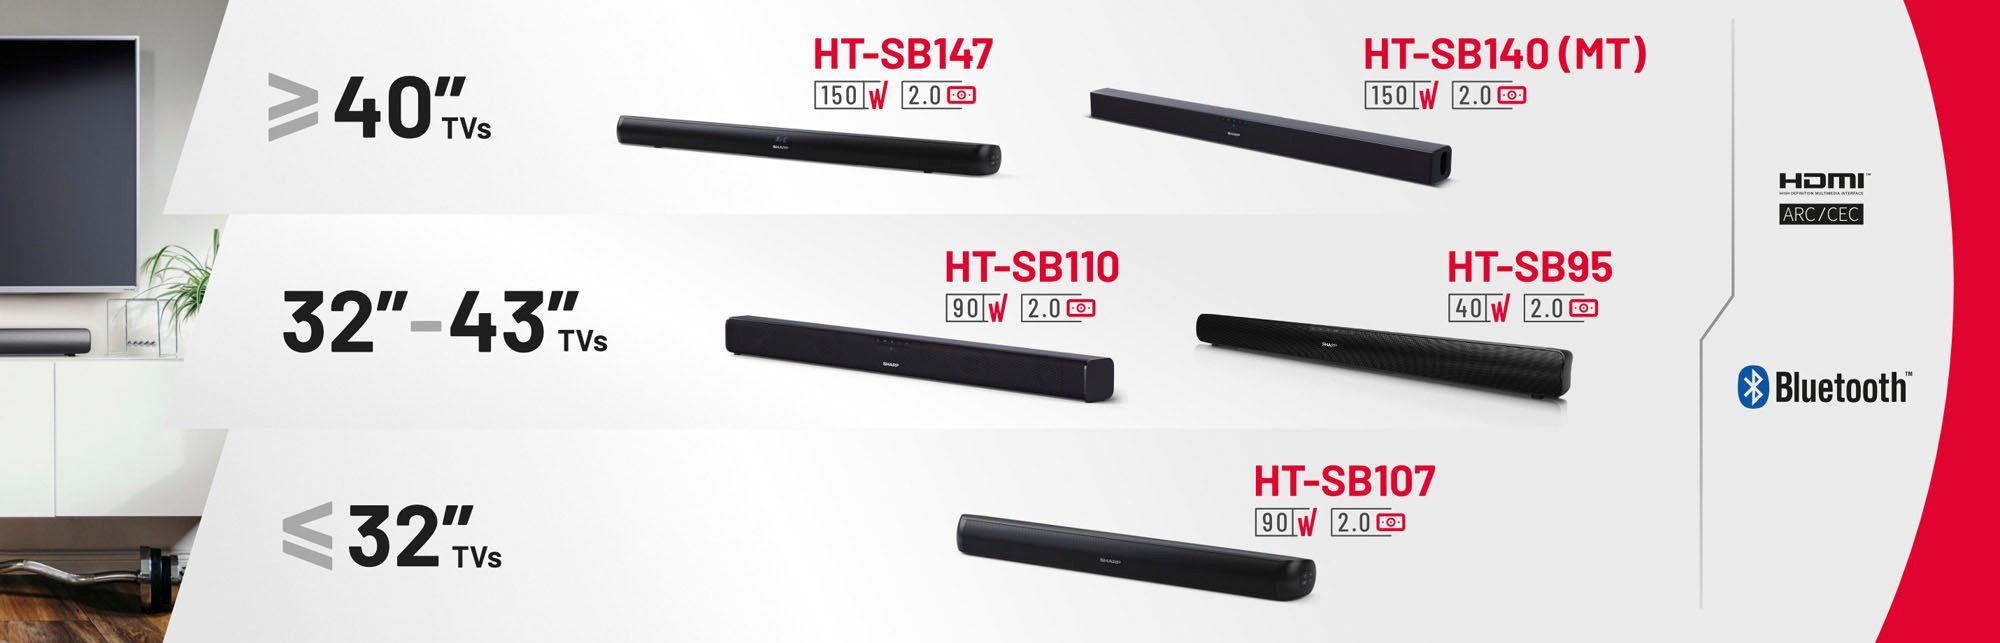 (Bluetooth) Soundbar Sharp Stereo HT-SB147